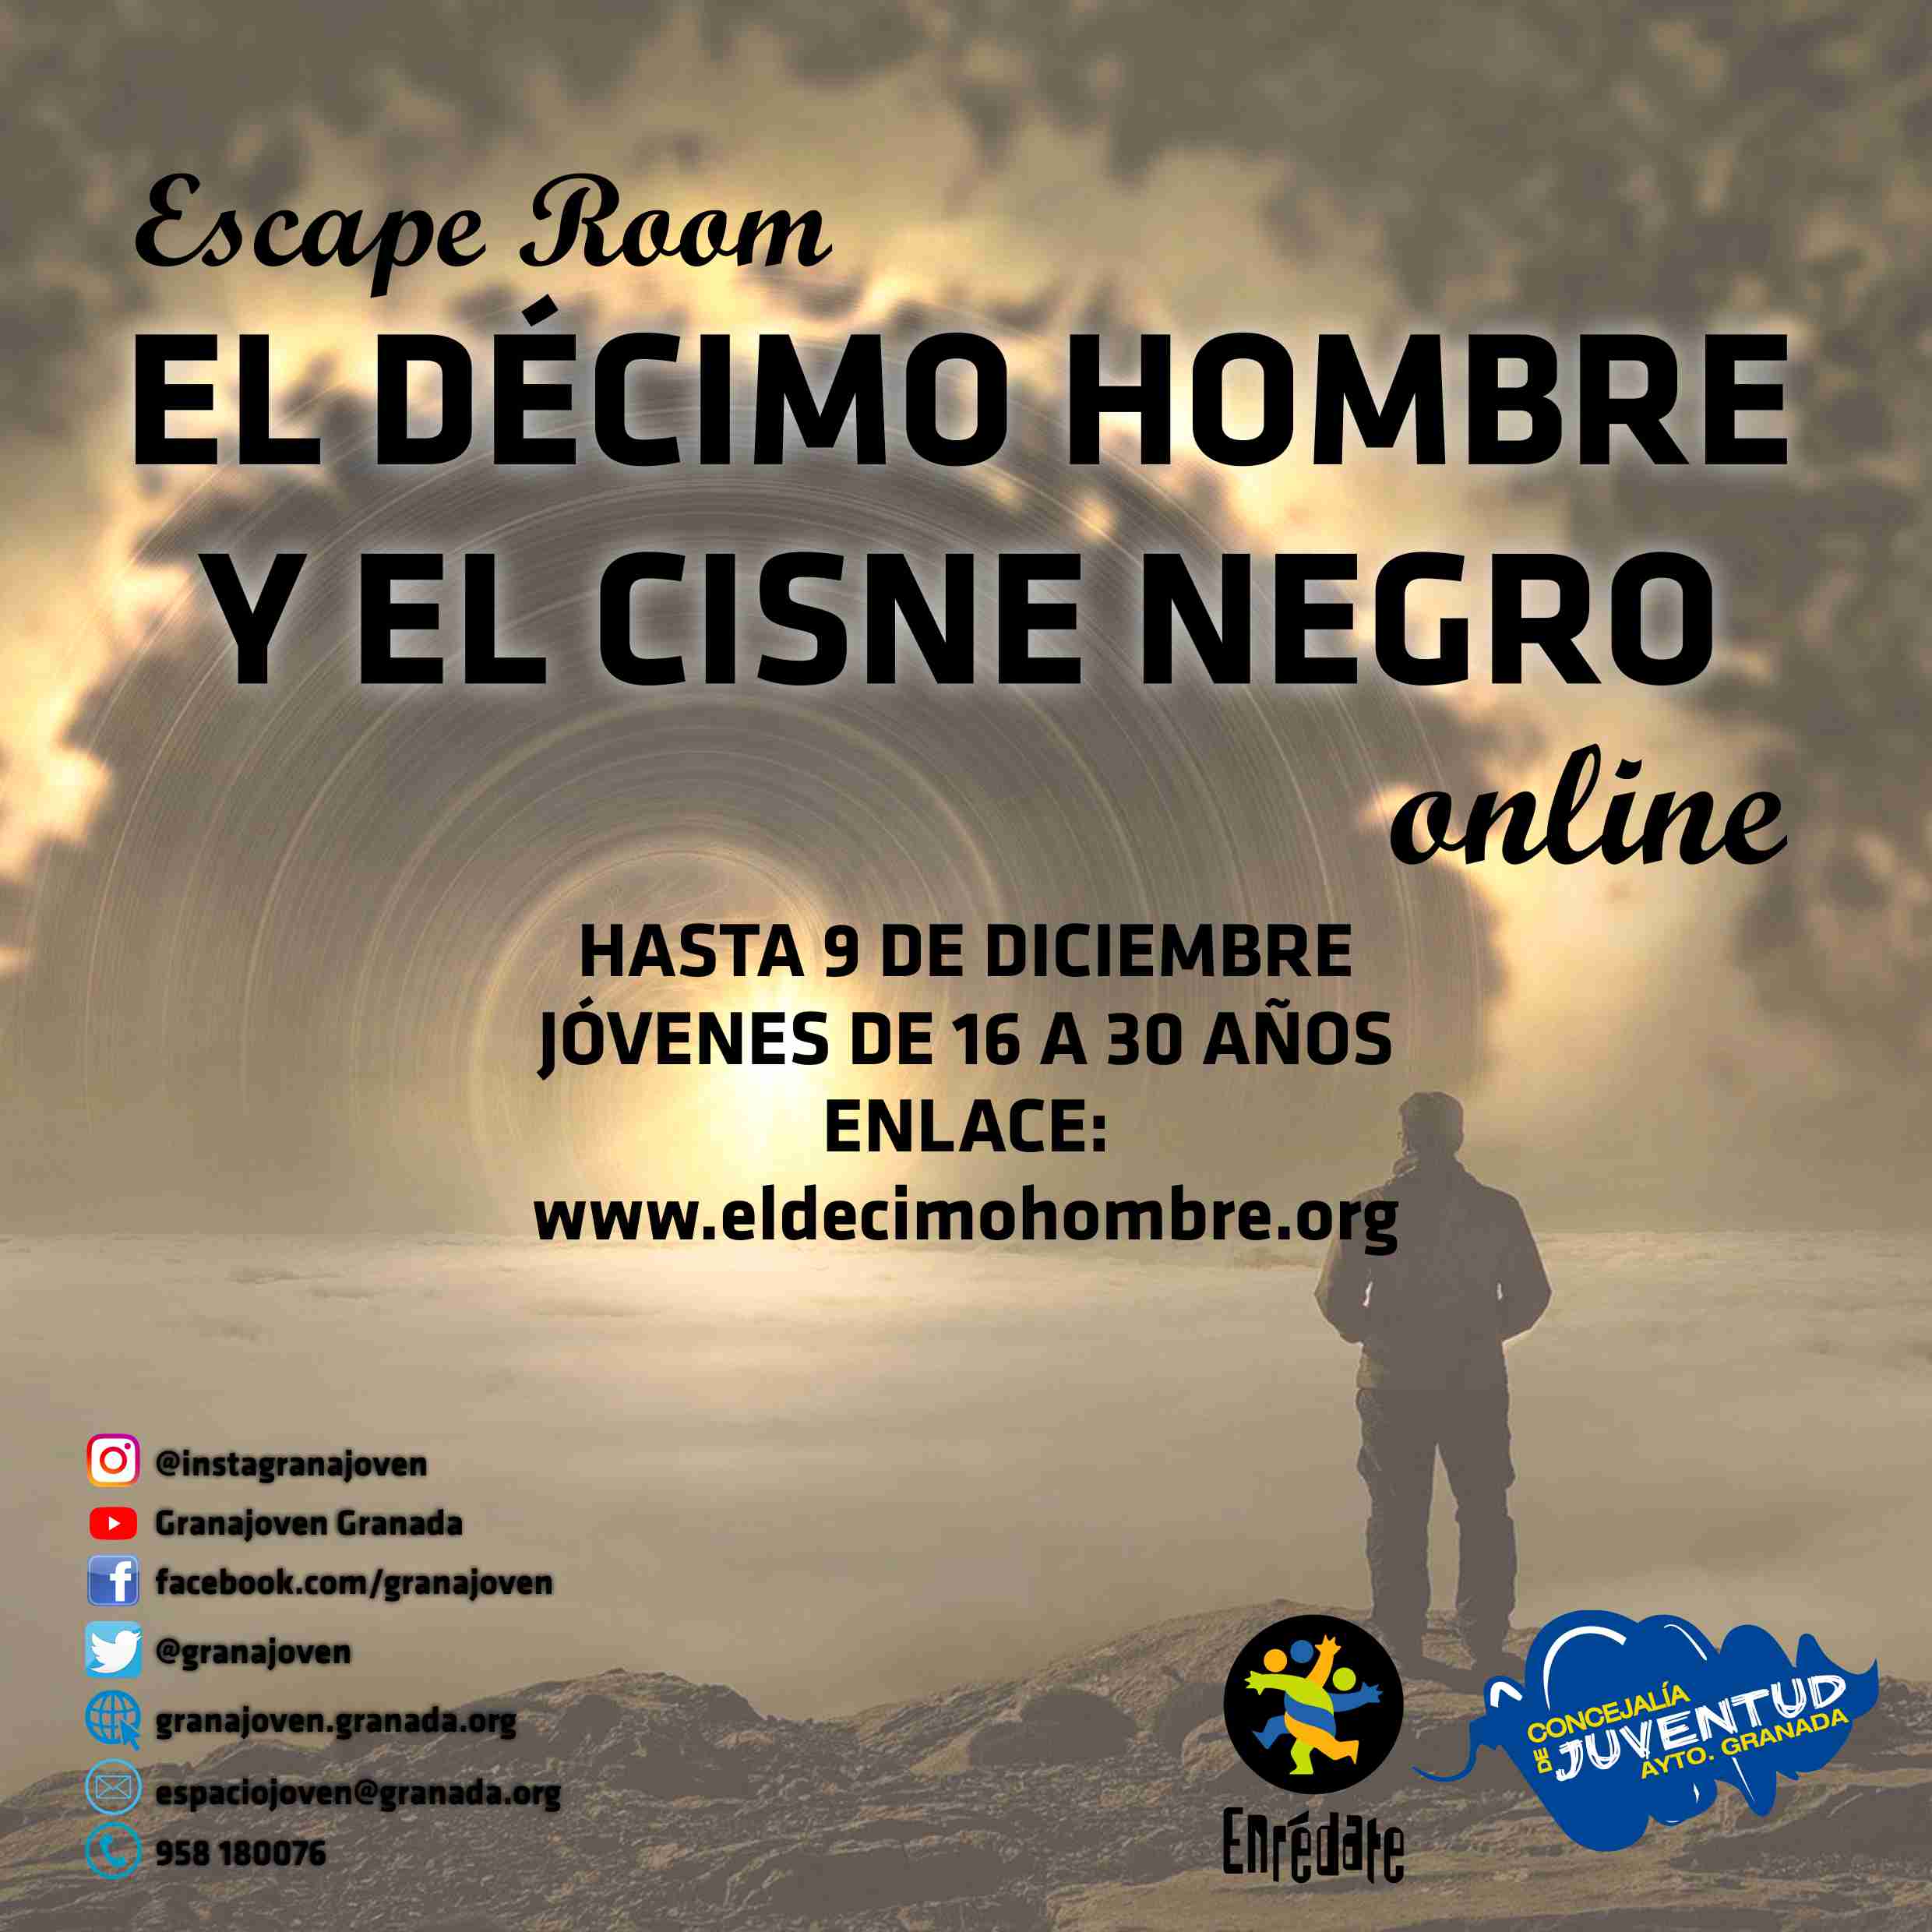 Escape Room online. Enredate